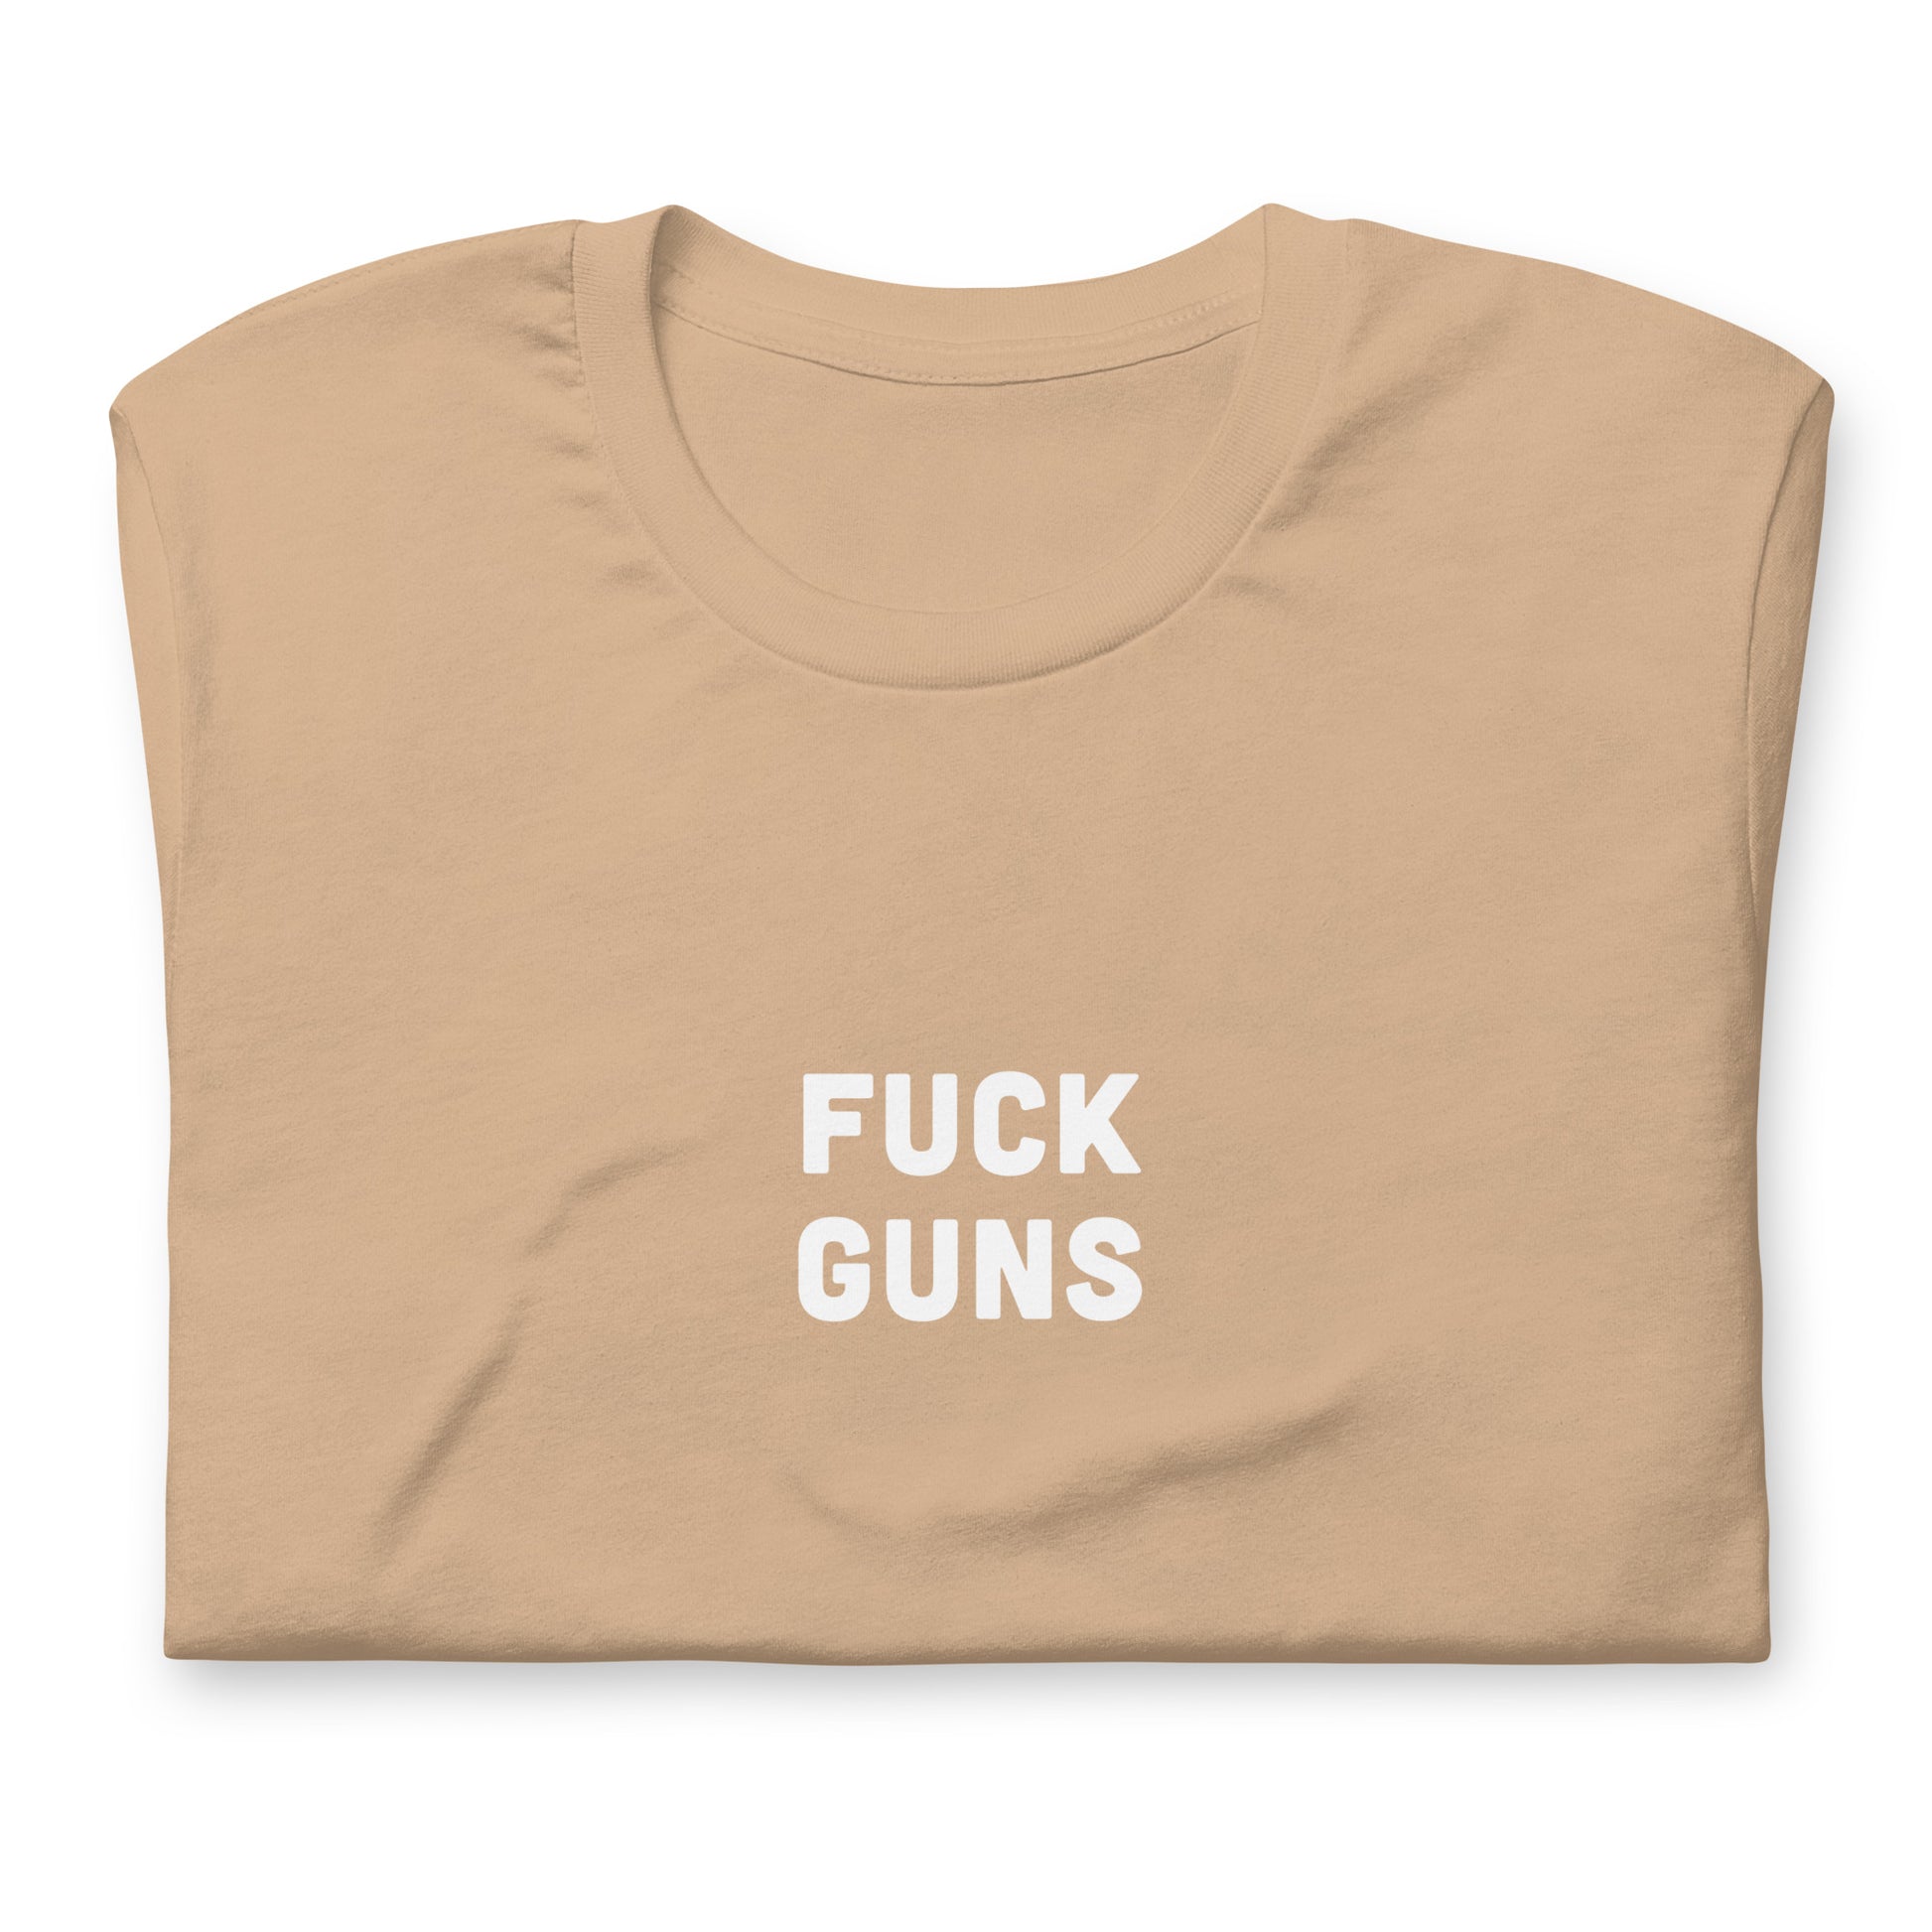 Fuck Guns T-Shirt Size XL Color Forest